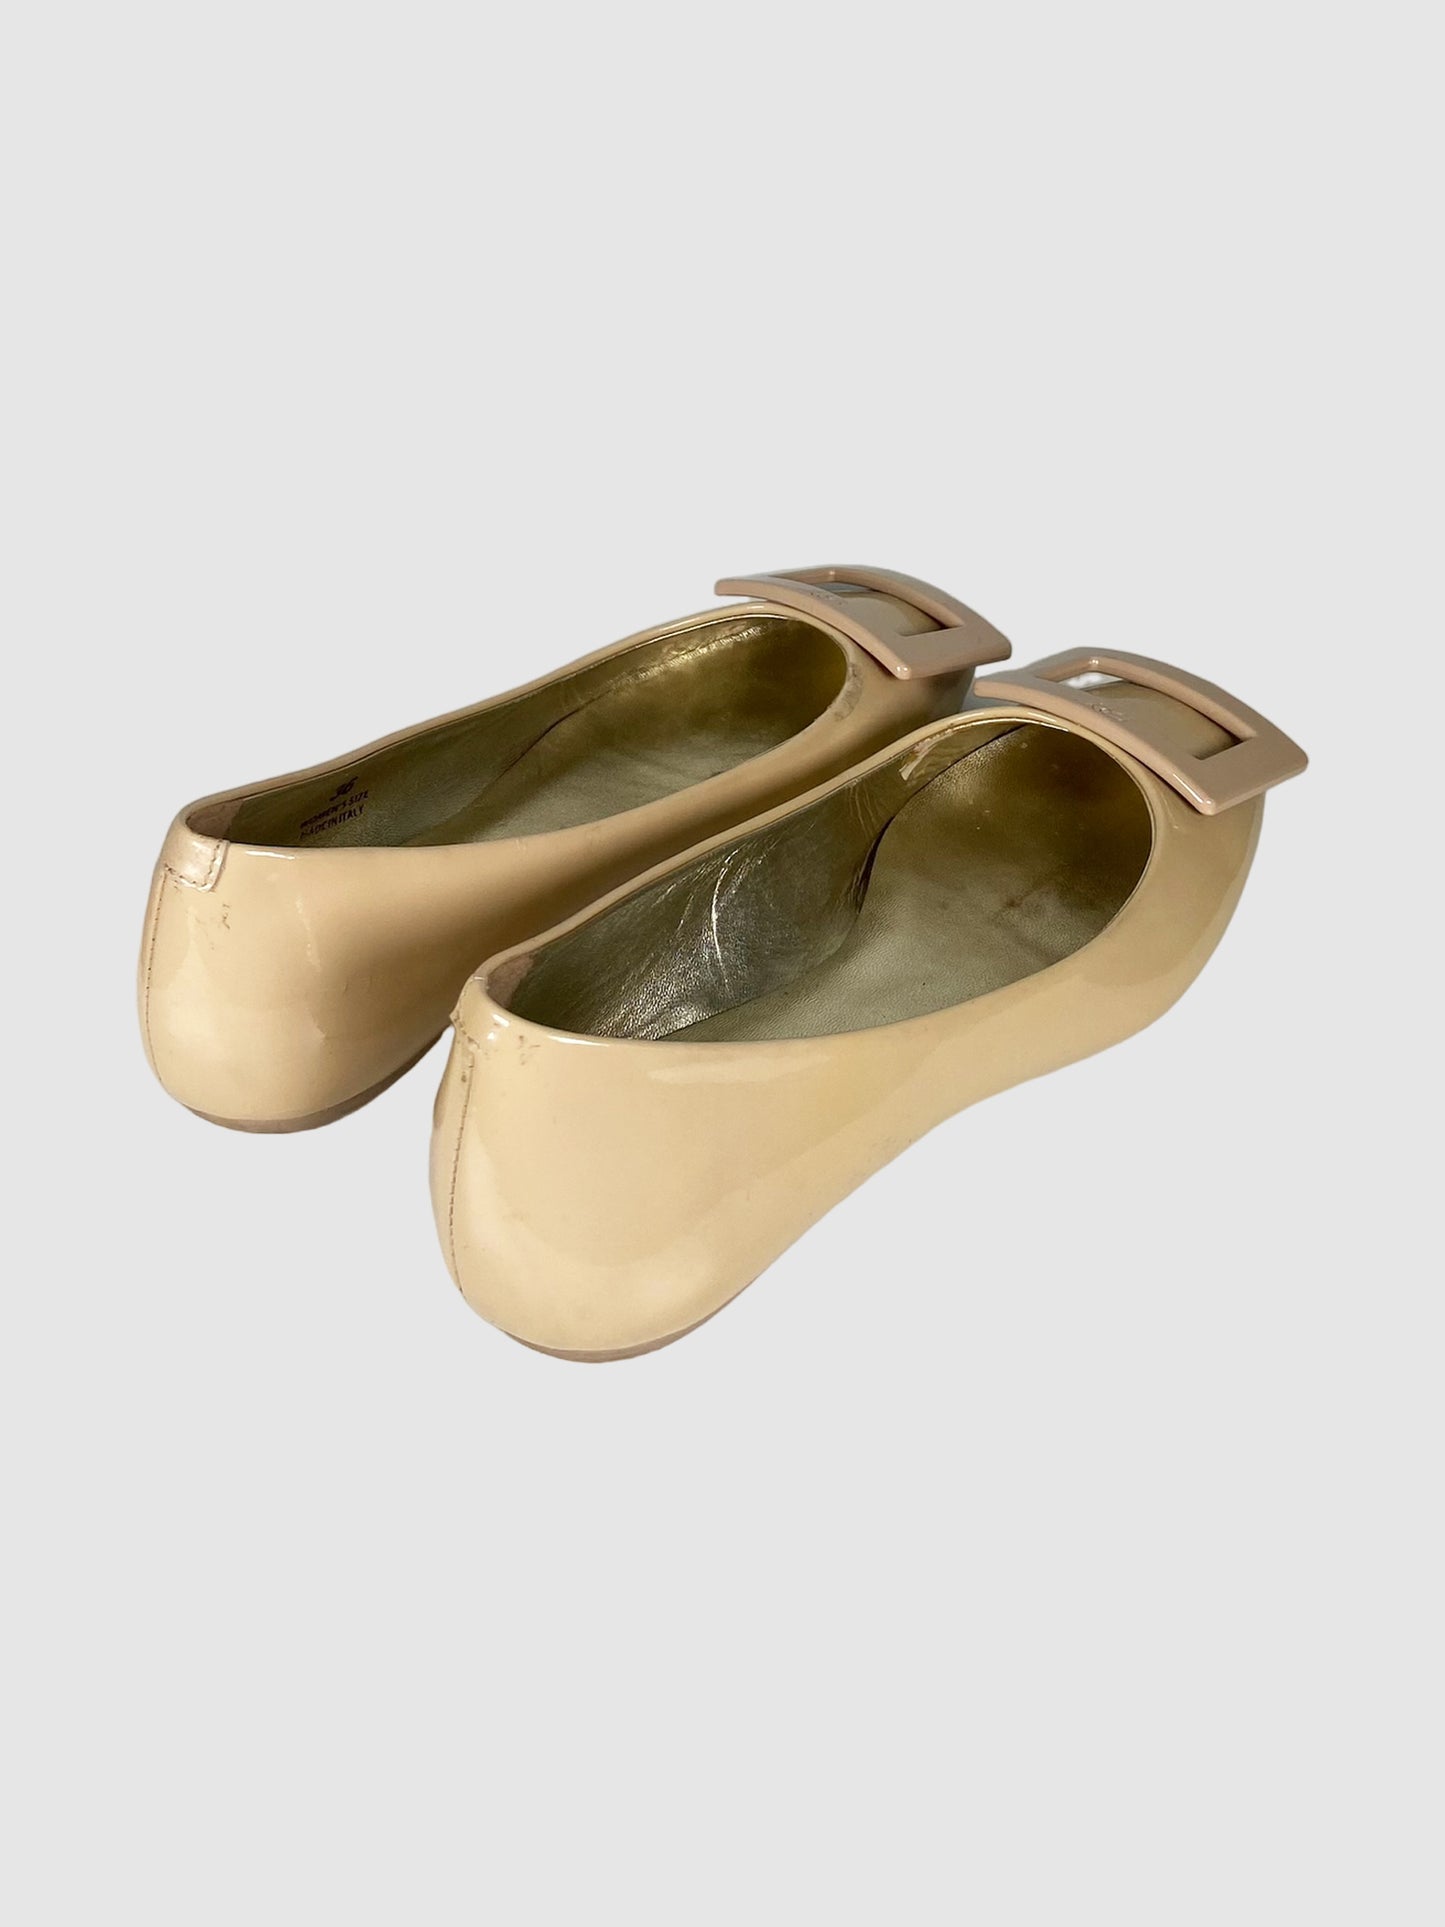 Patent Leather Ballerina Flats - Size 36